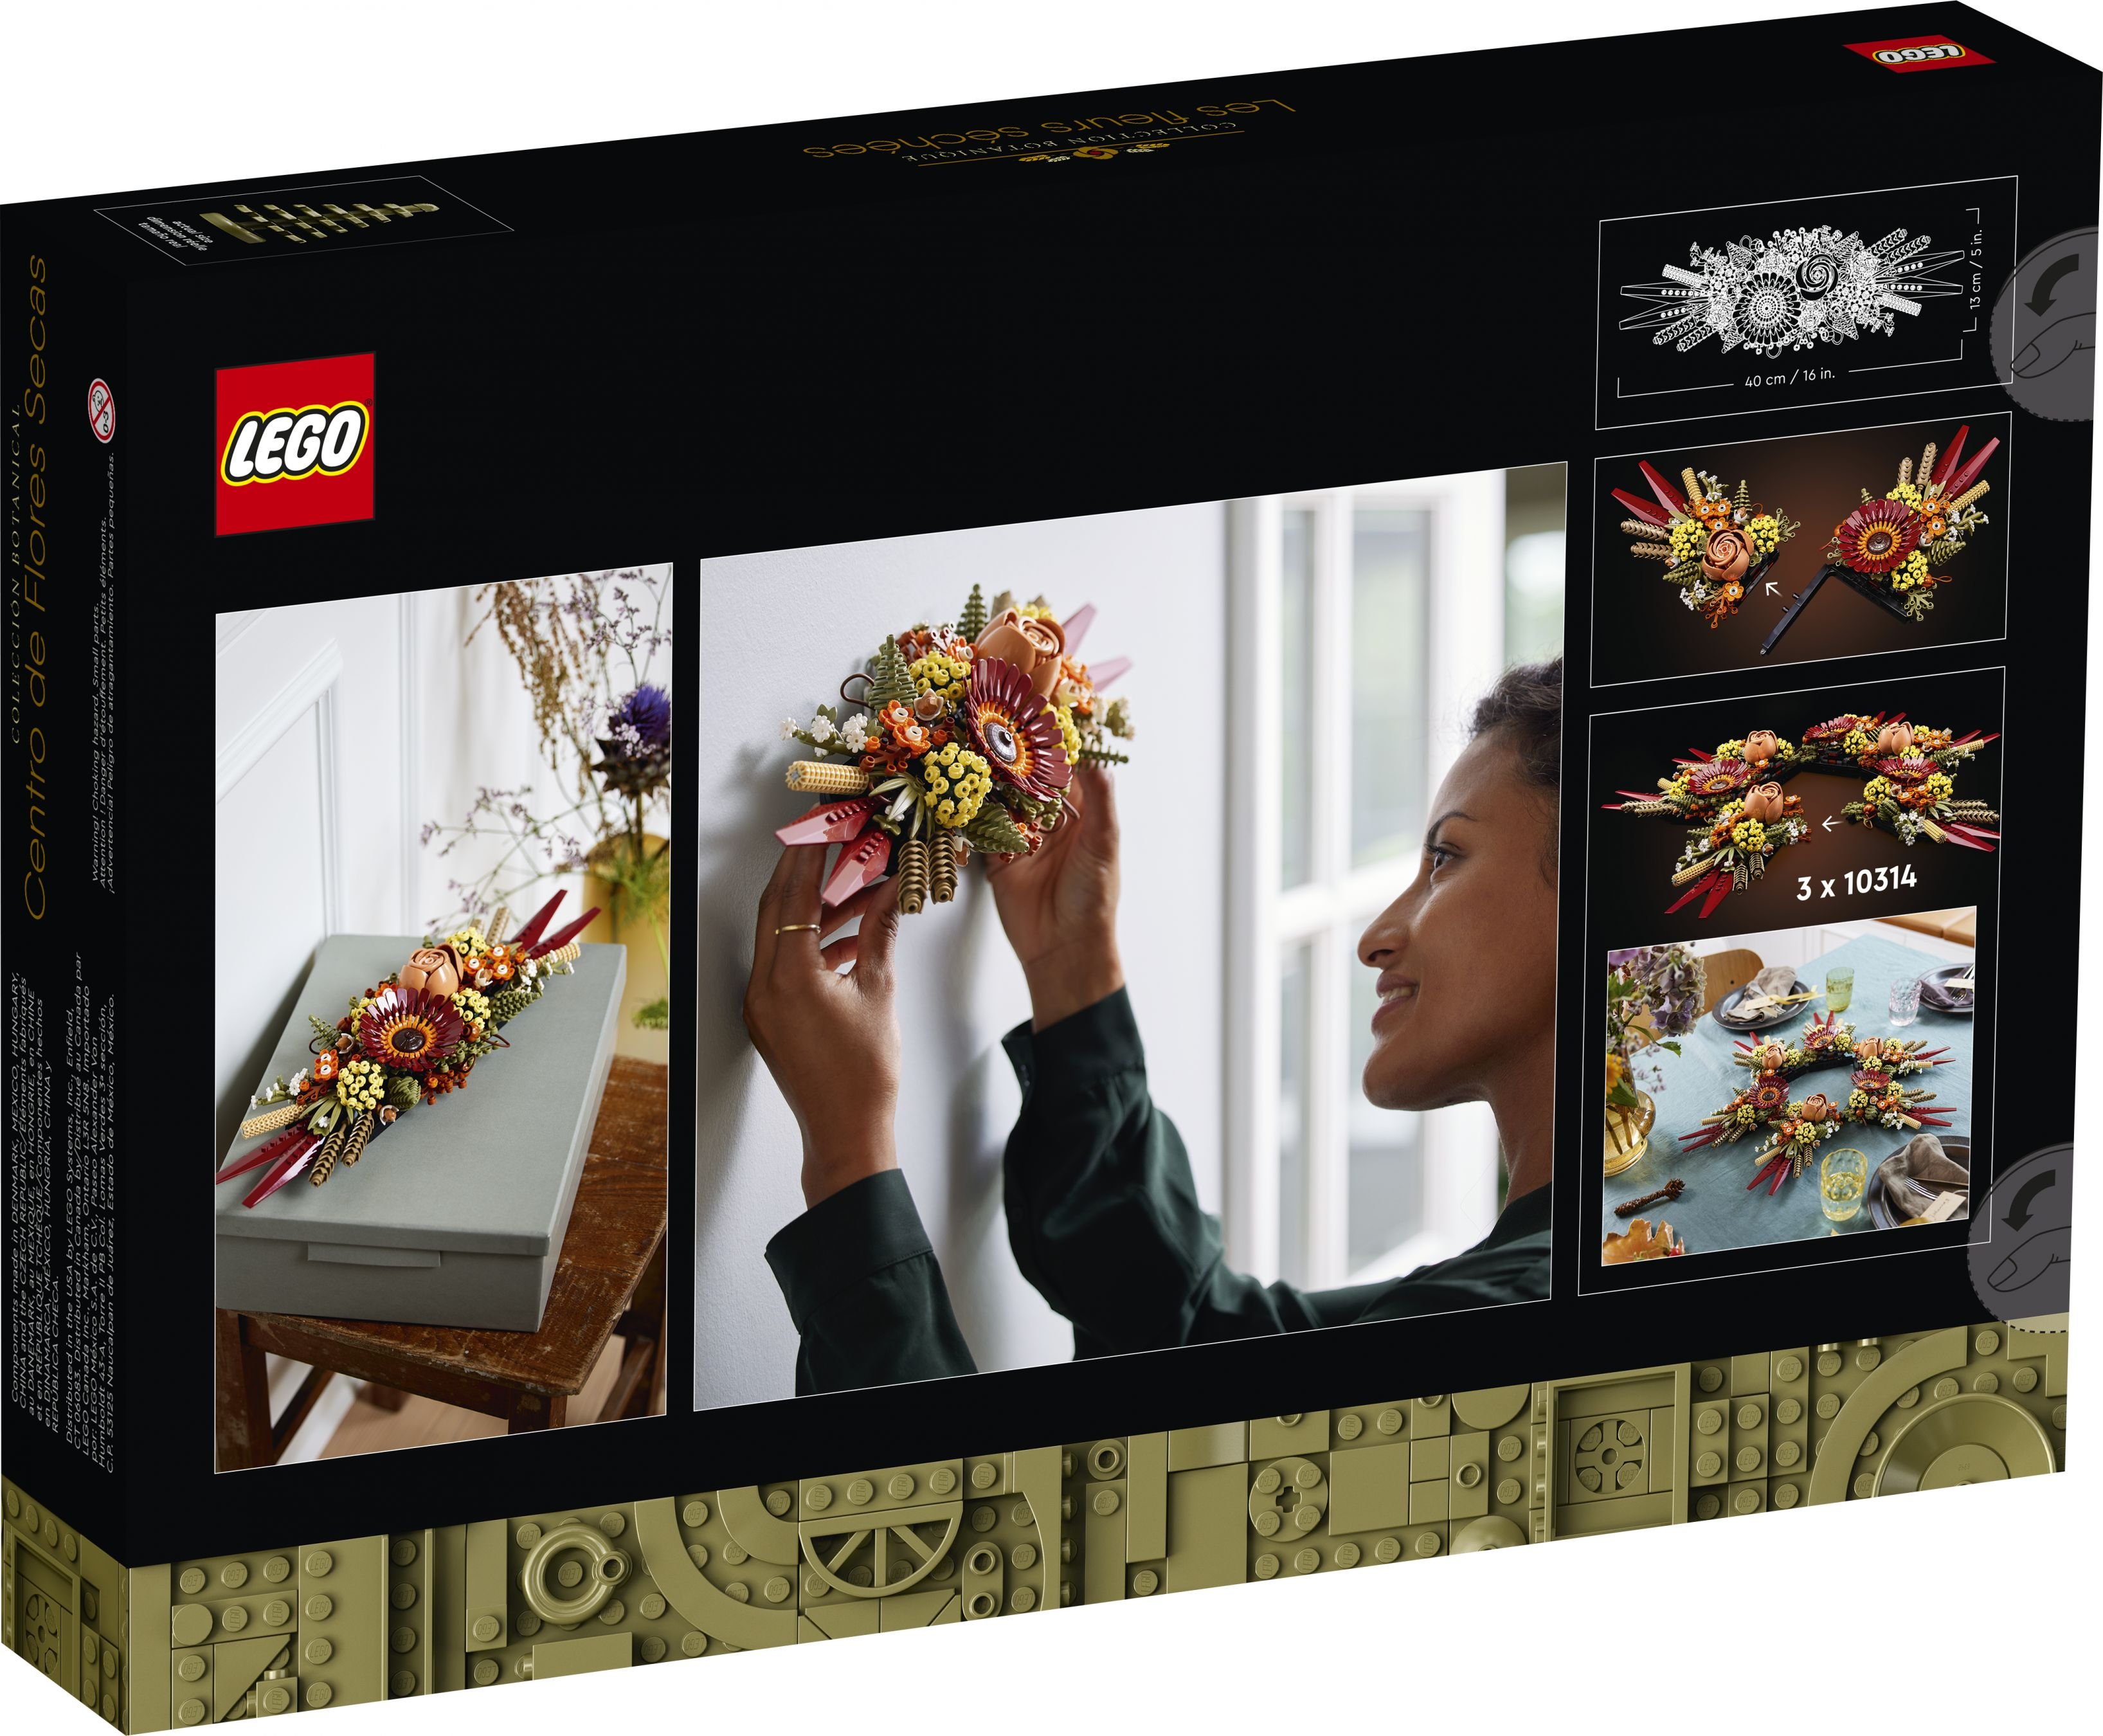 LEGO Advanced Models 10314 Trockenblumengesteck LEGO_10314_Box5_v39.jpg